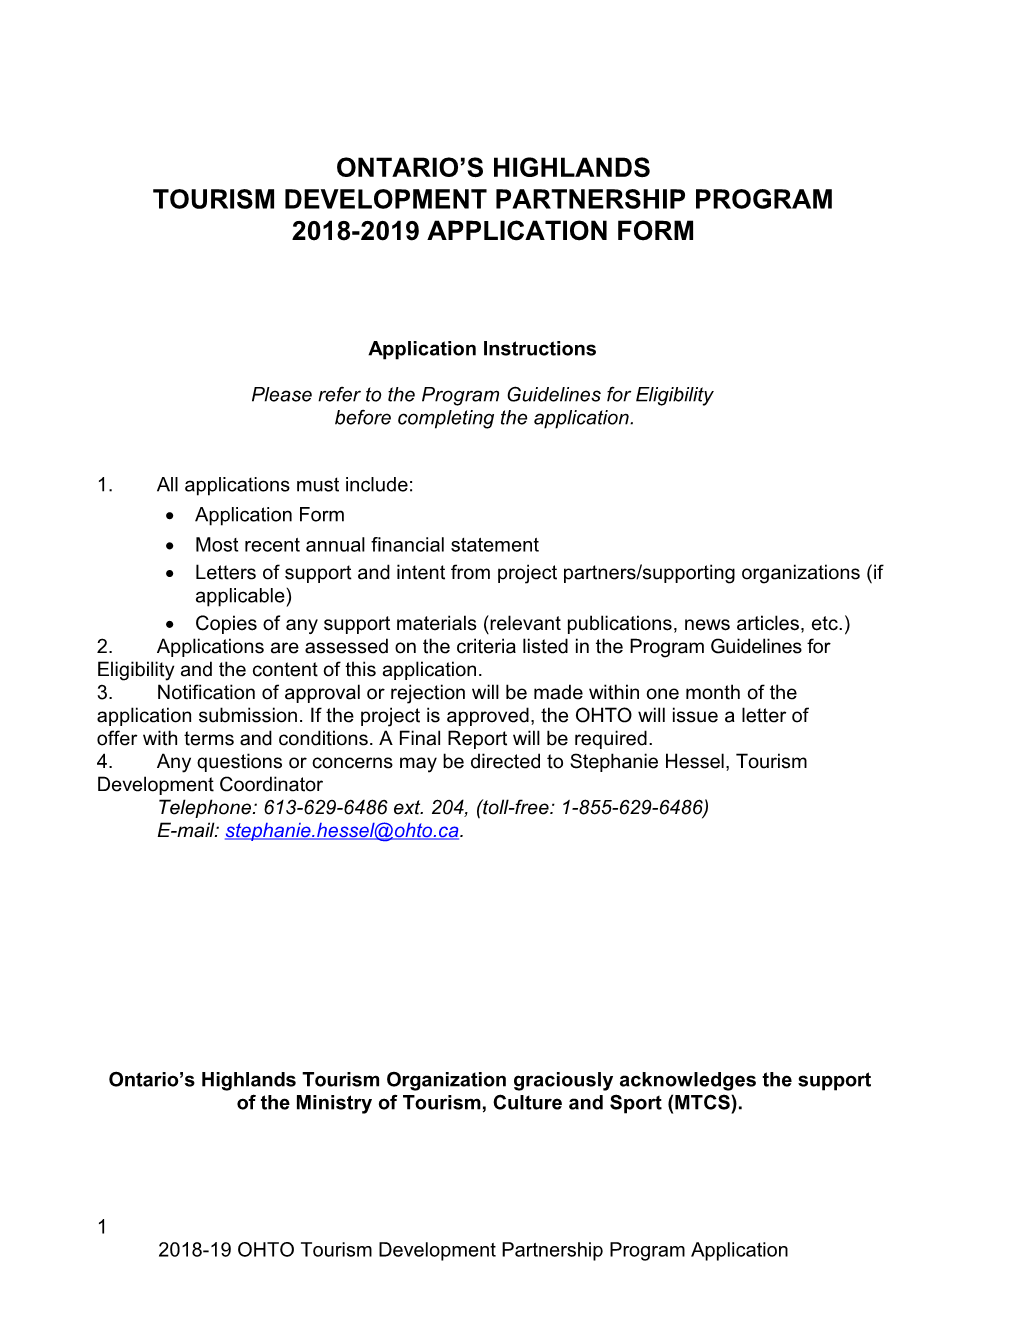 Tourism Development Partnership Program